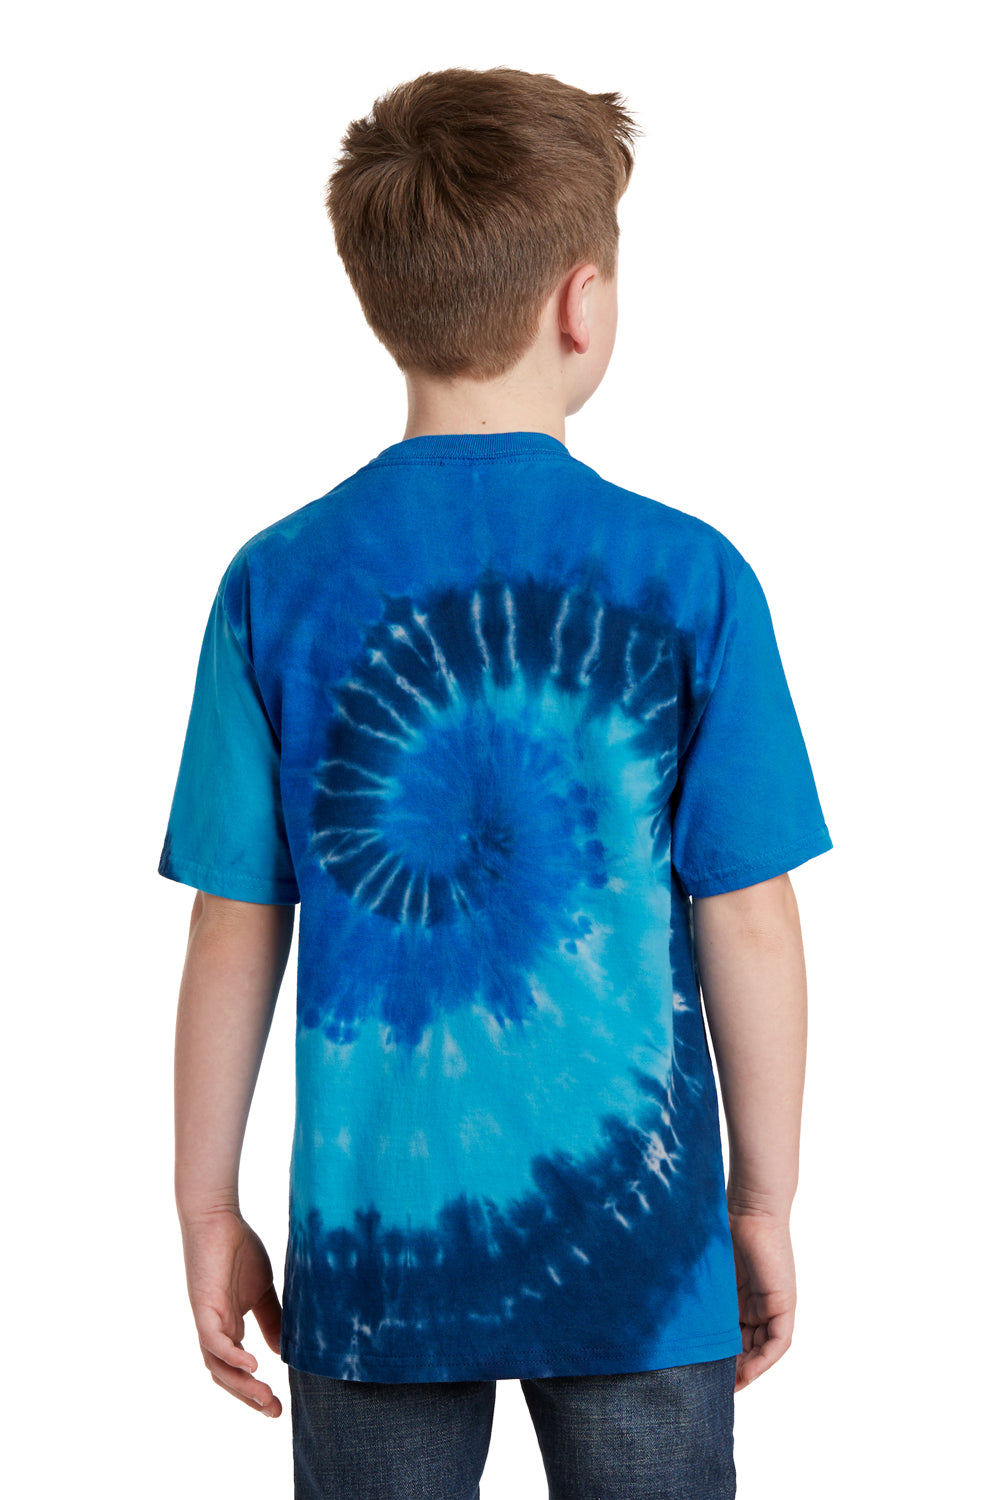 Port & Company PC147Y Youth Tie-Dye Short Sleeve Crewneck T-Shirt Ocean Rainbow Back